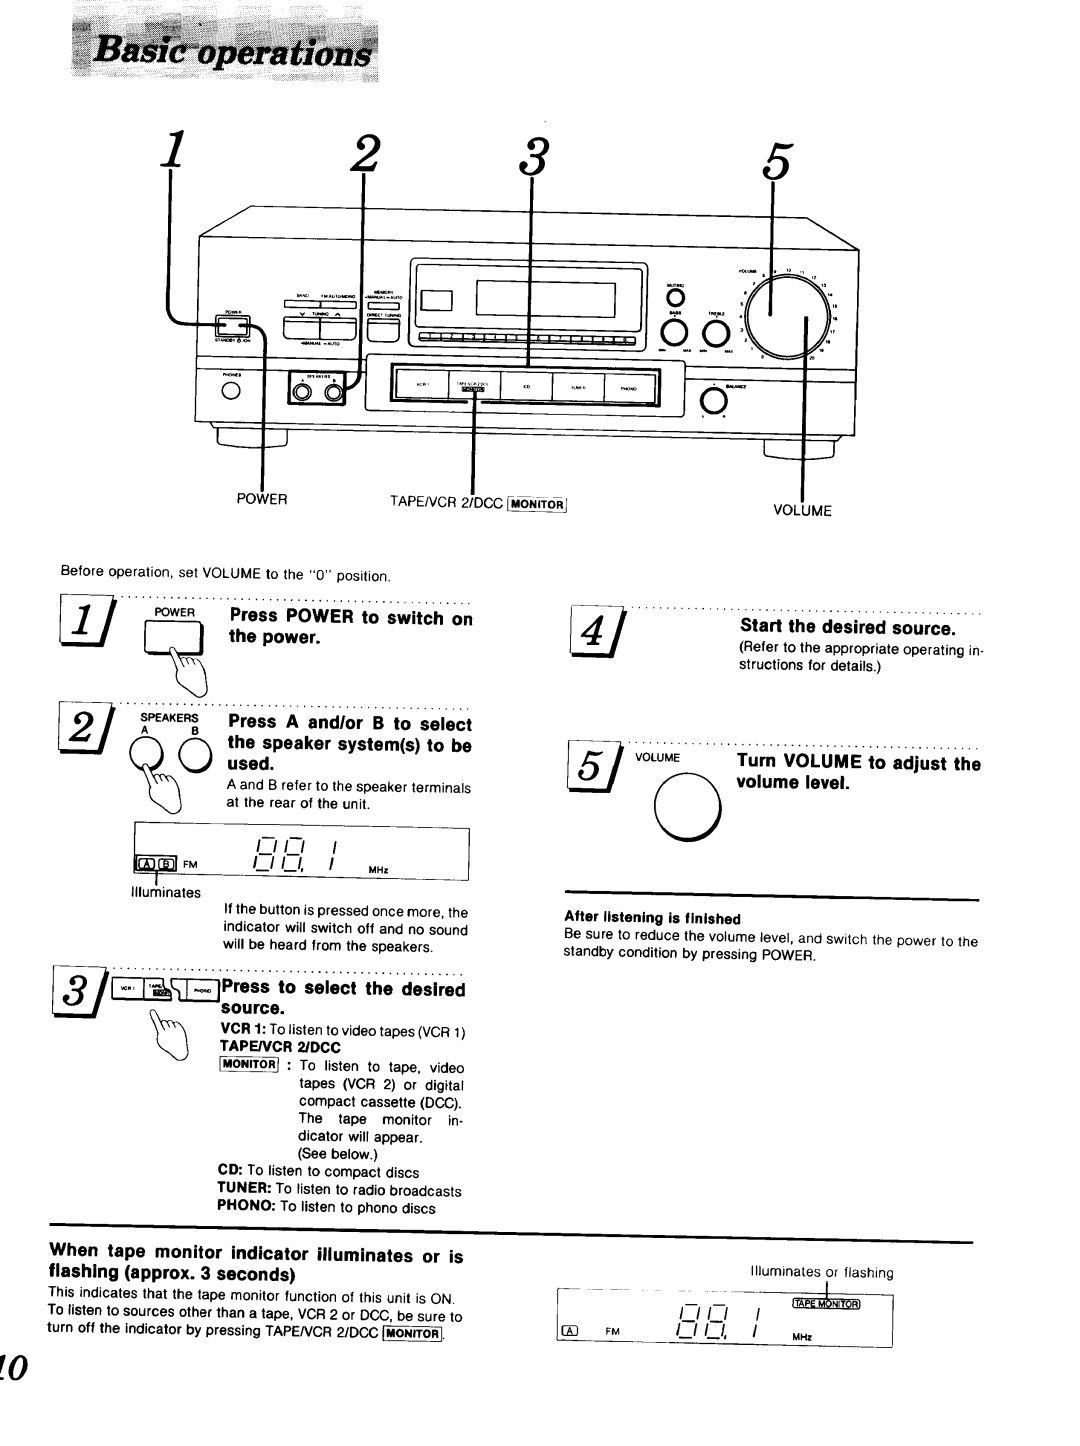 Technics SA-GX 19O manual used, PreSS, desirea, Li, tO seiecithe, Tapfjvcrocc 